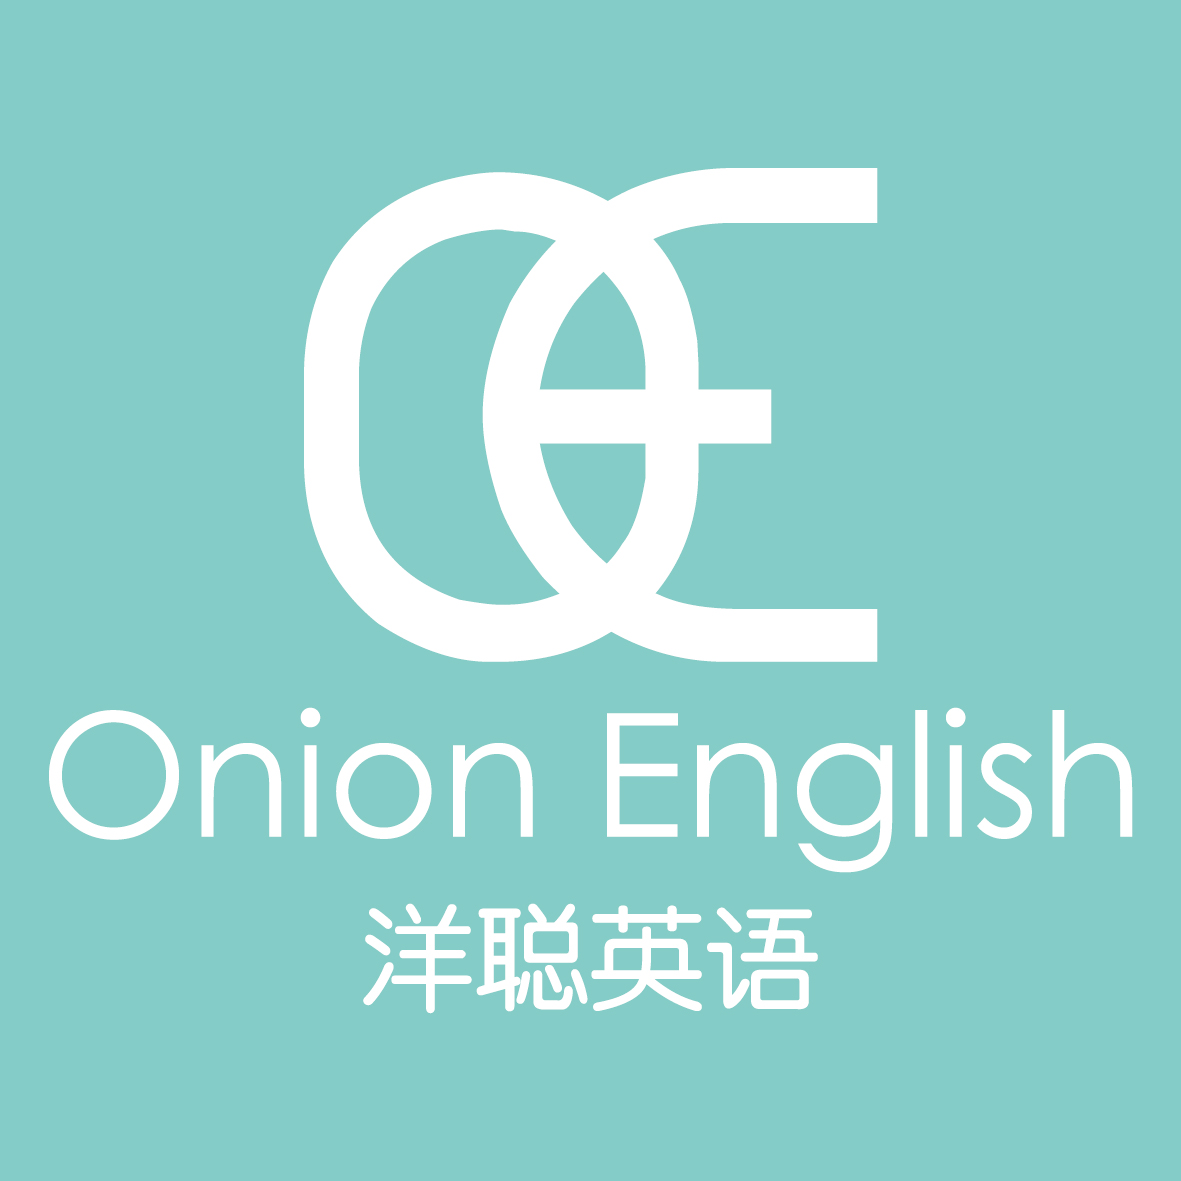 洋聪英语OnionEnglish